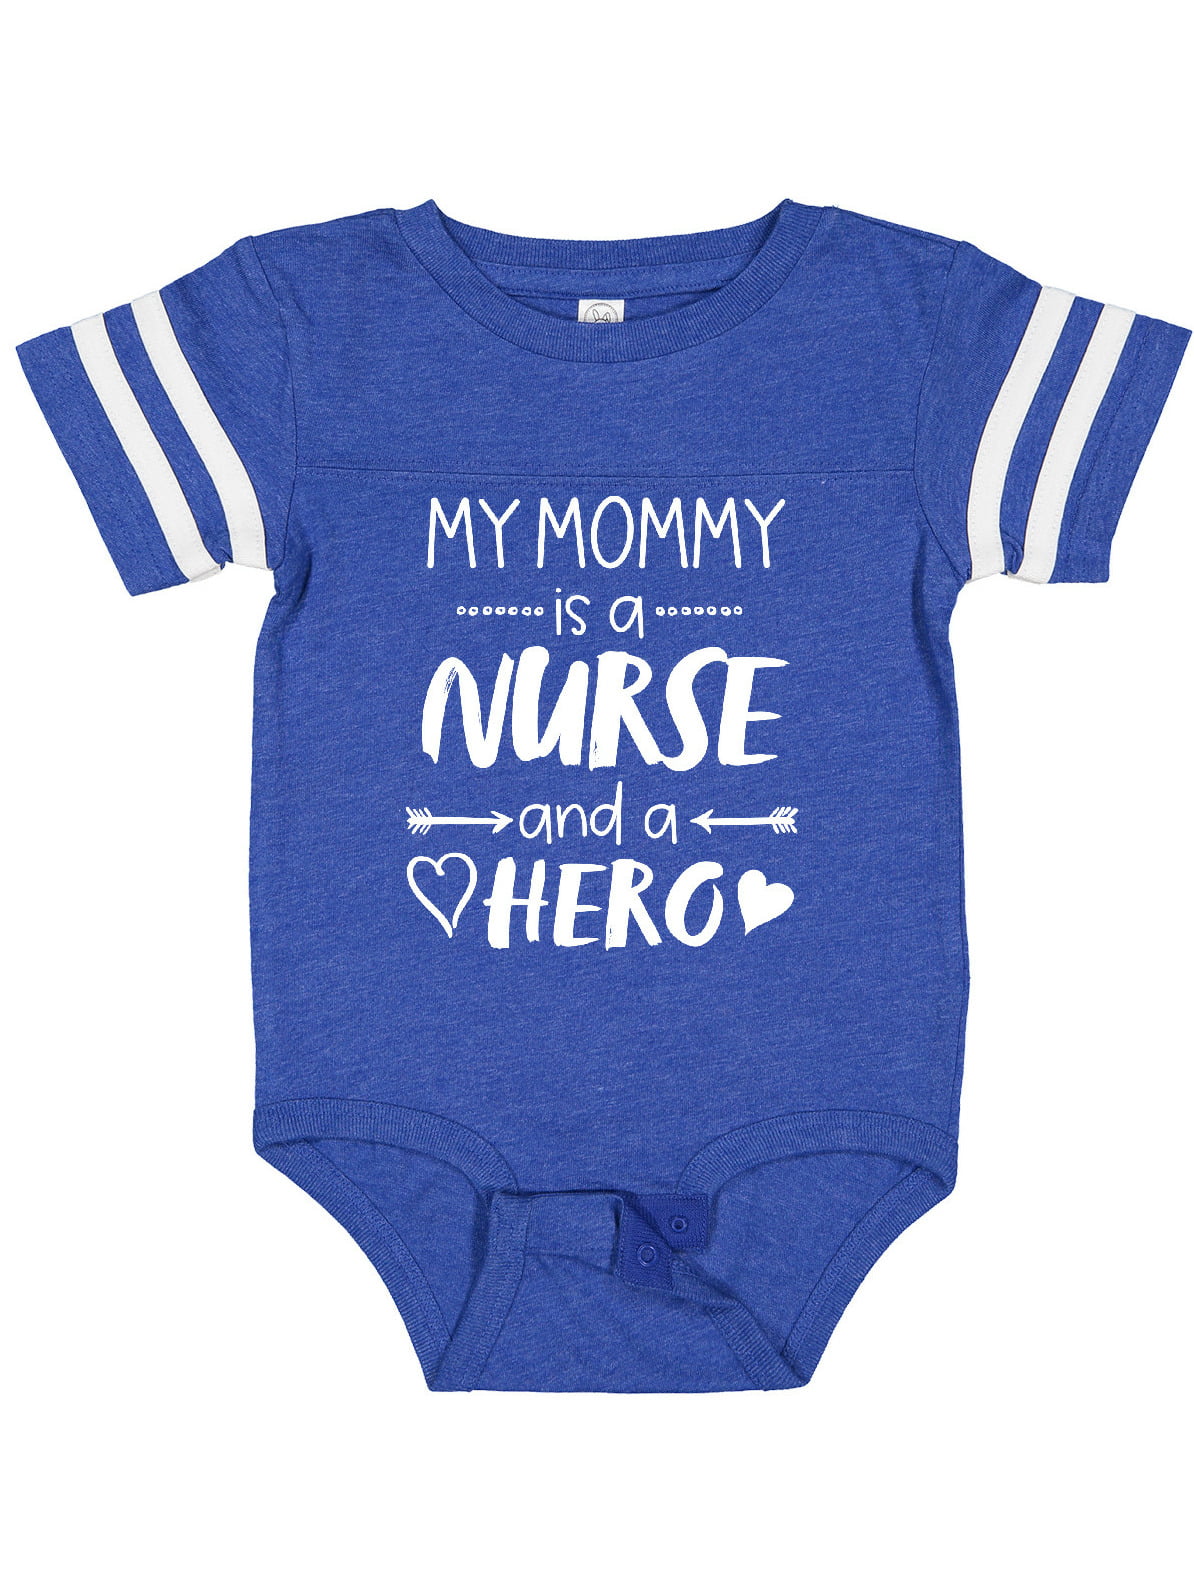 Baby Girl Nurse Clothes, Heroes Baby Boy Clothes